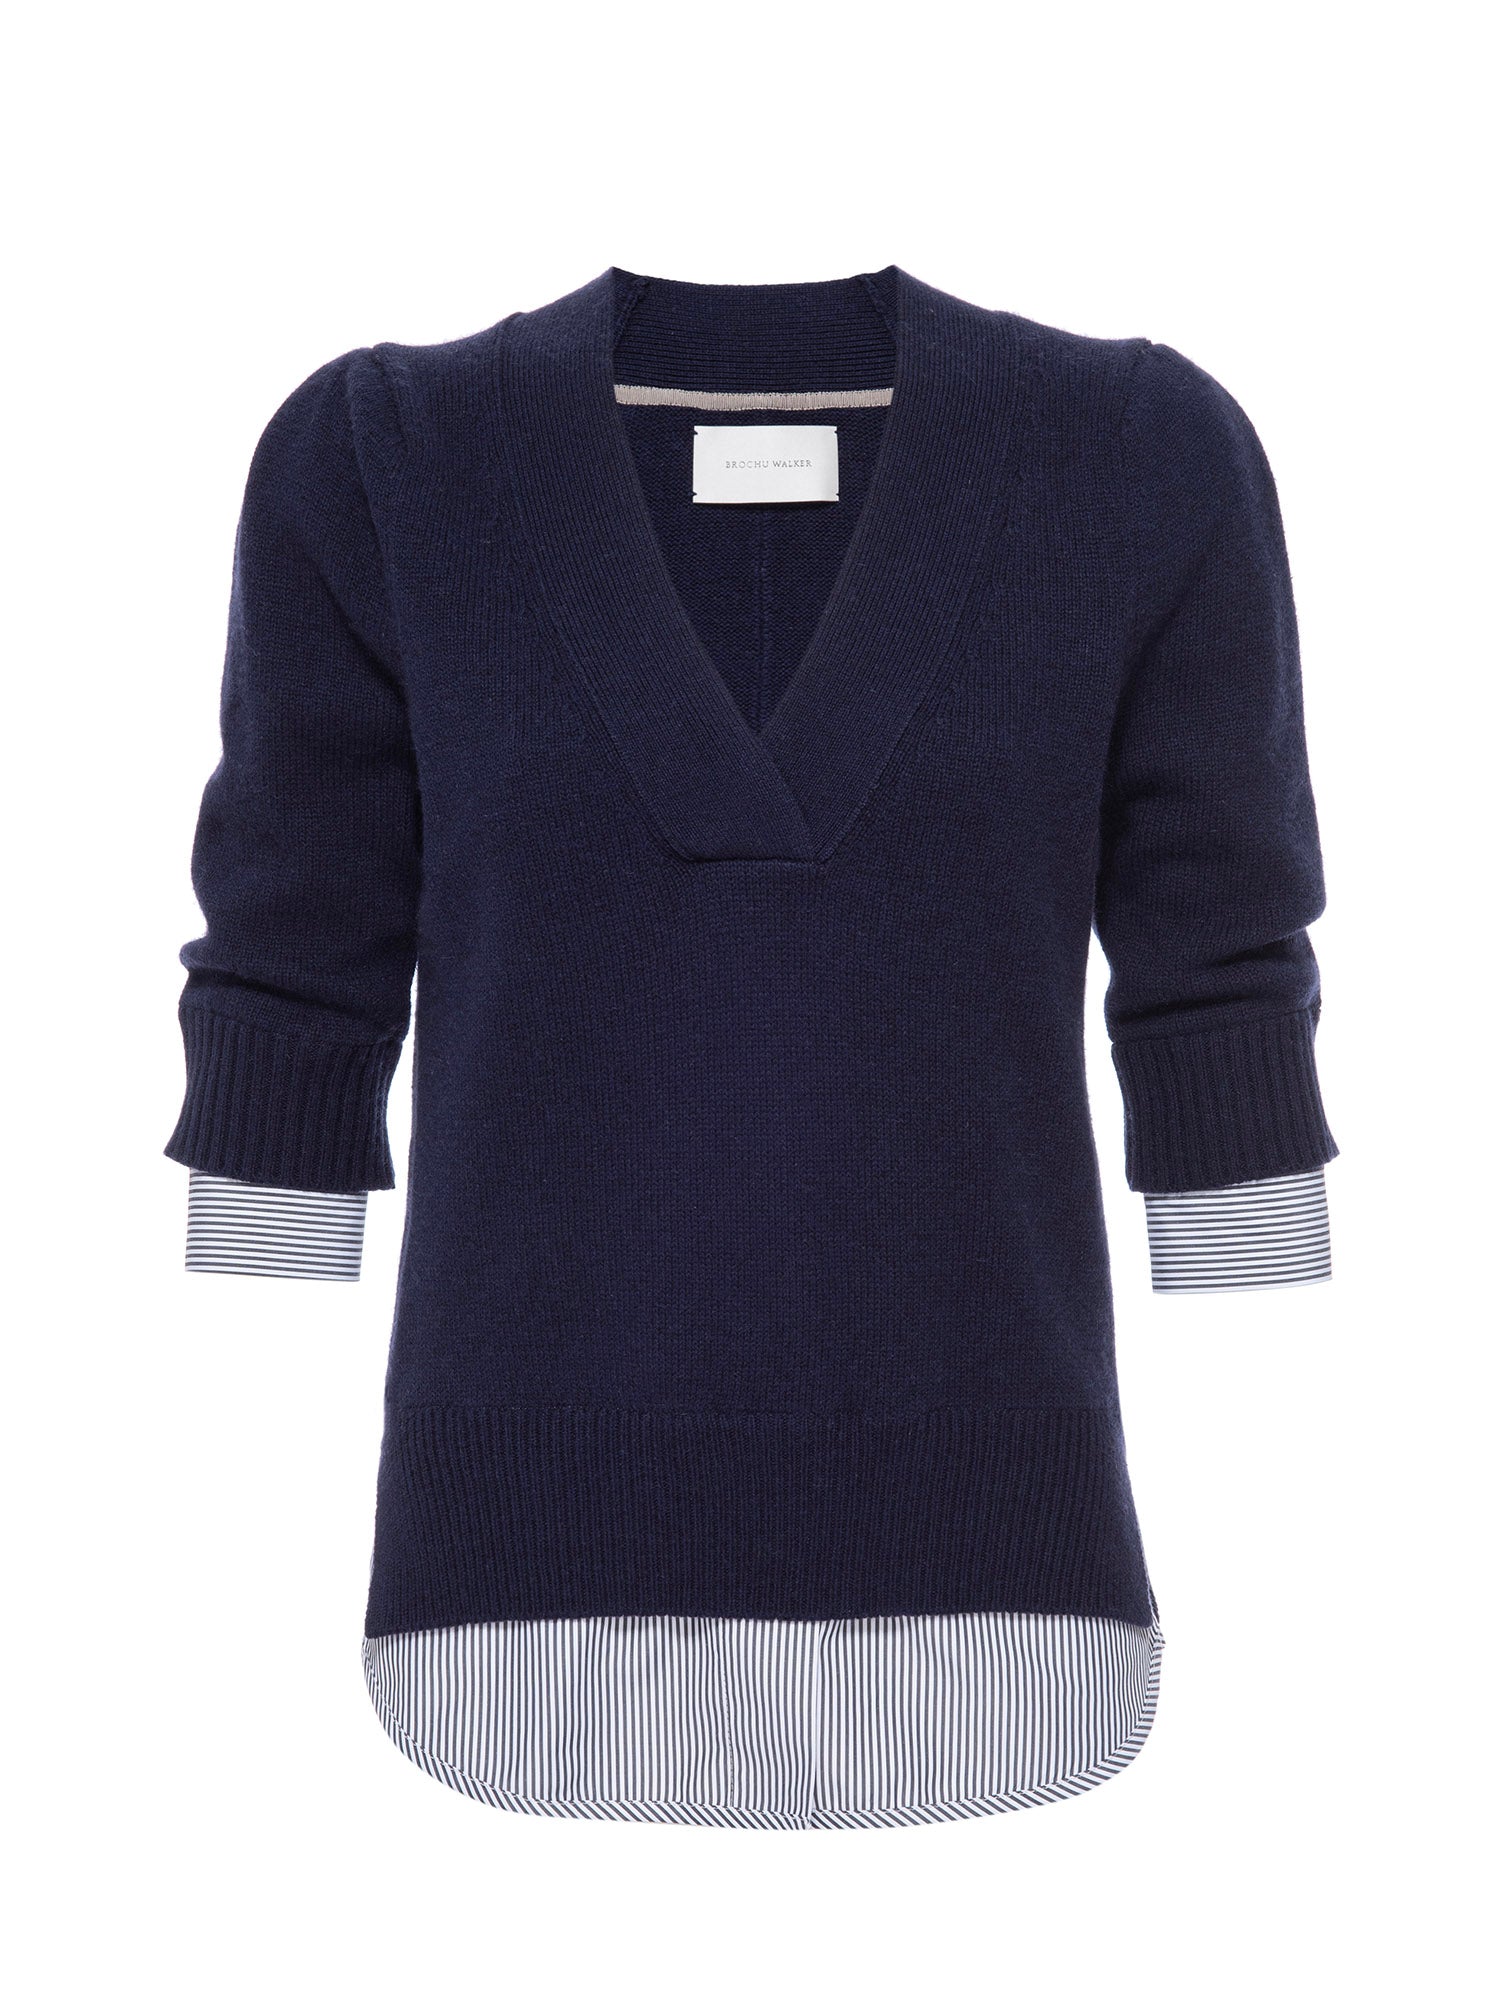 Lucie navy stripe layered three-quarter sleeve v-neck sweater flat view